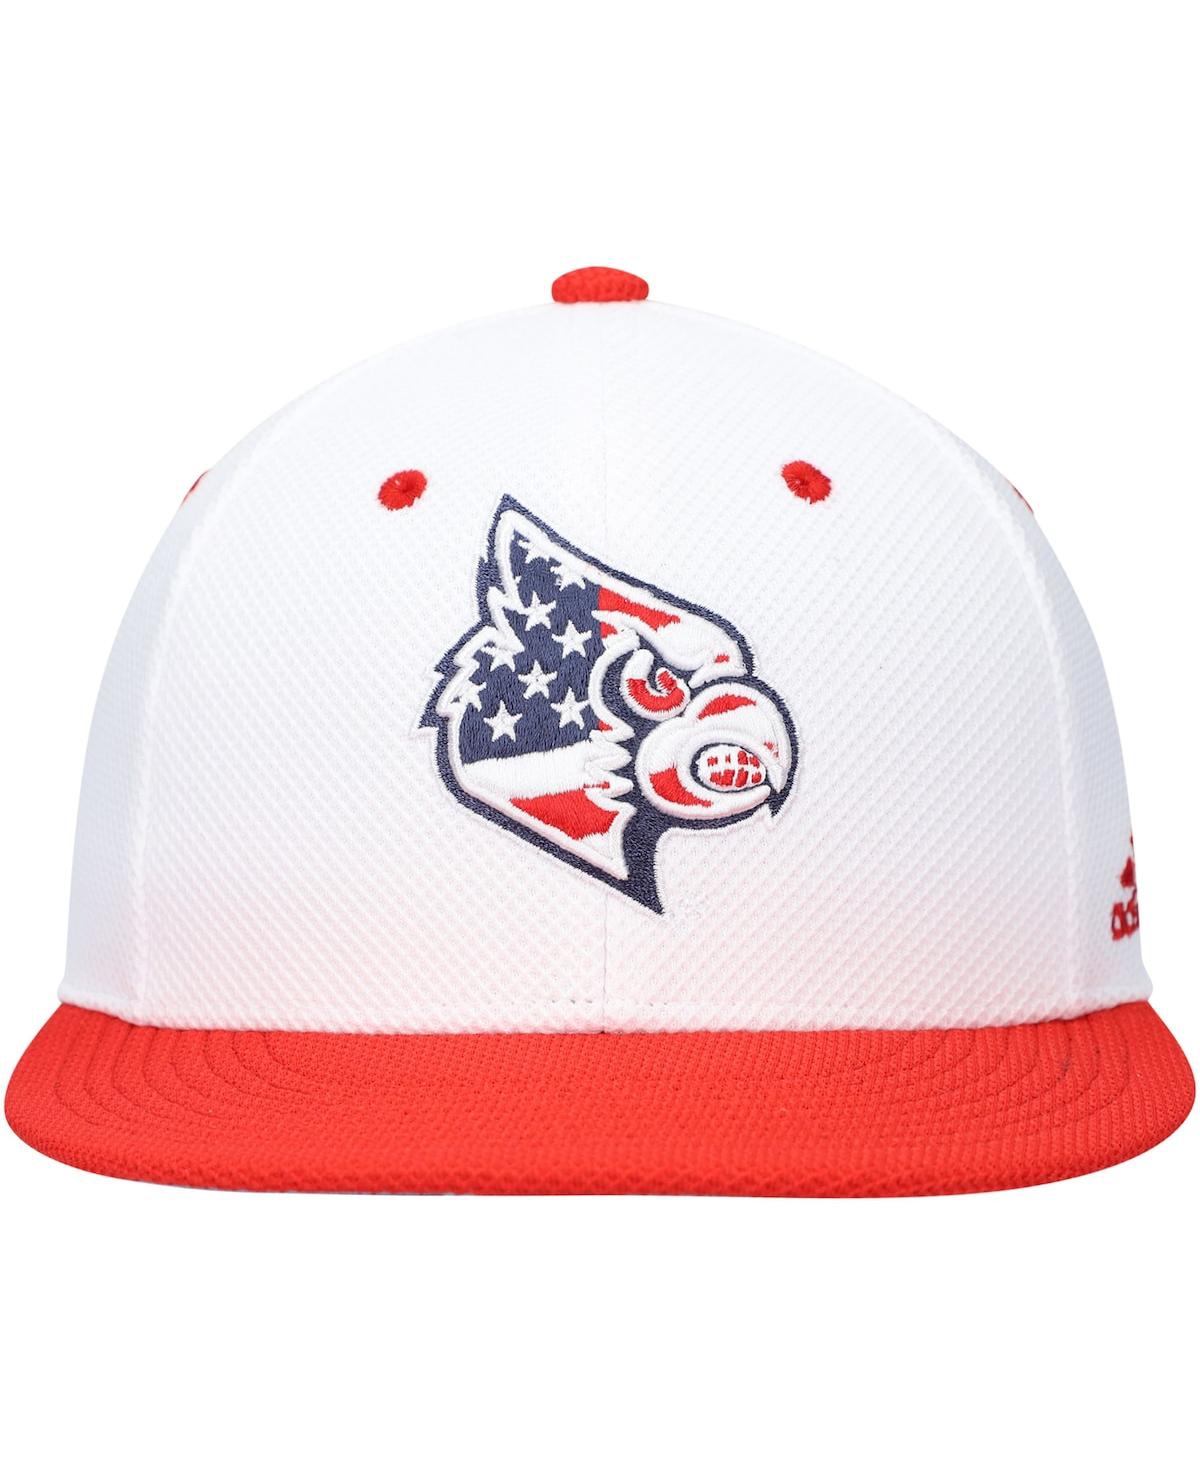 Shop Adidas Originals Men's Adidas White Louisville Cardinals On-field Baseball Fitted Hat